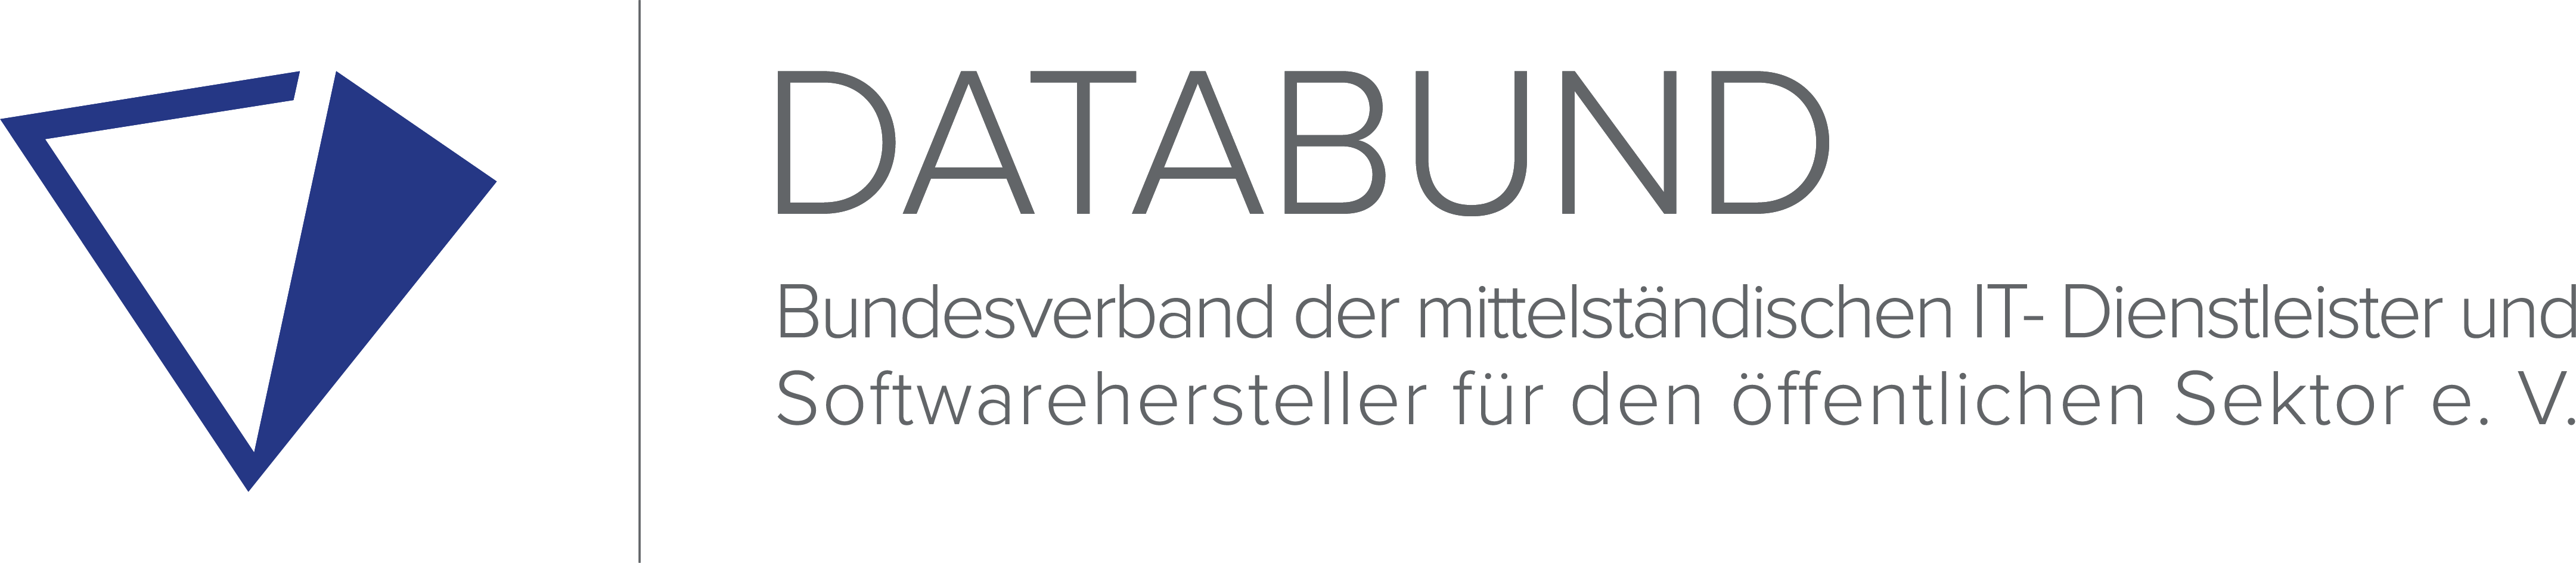 Databund-Logo_horizontal_Text_RGB